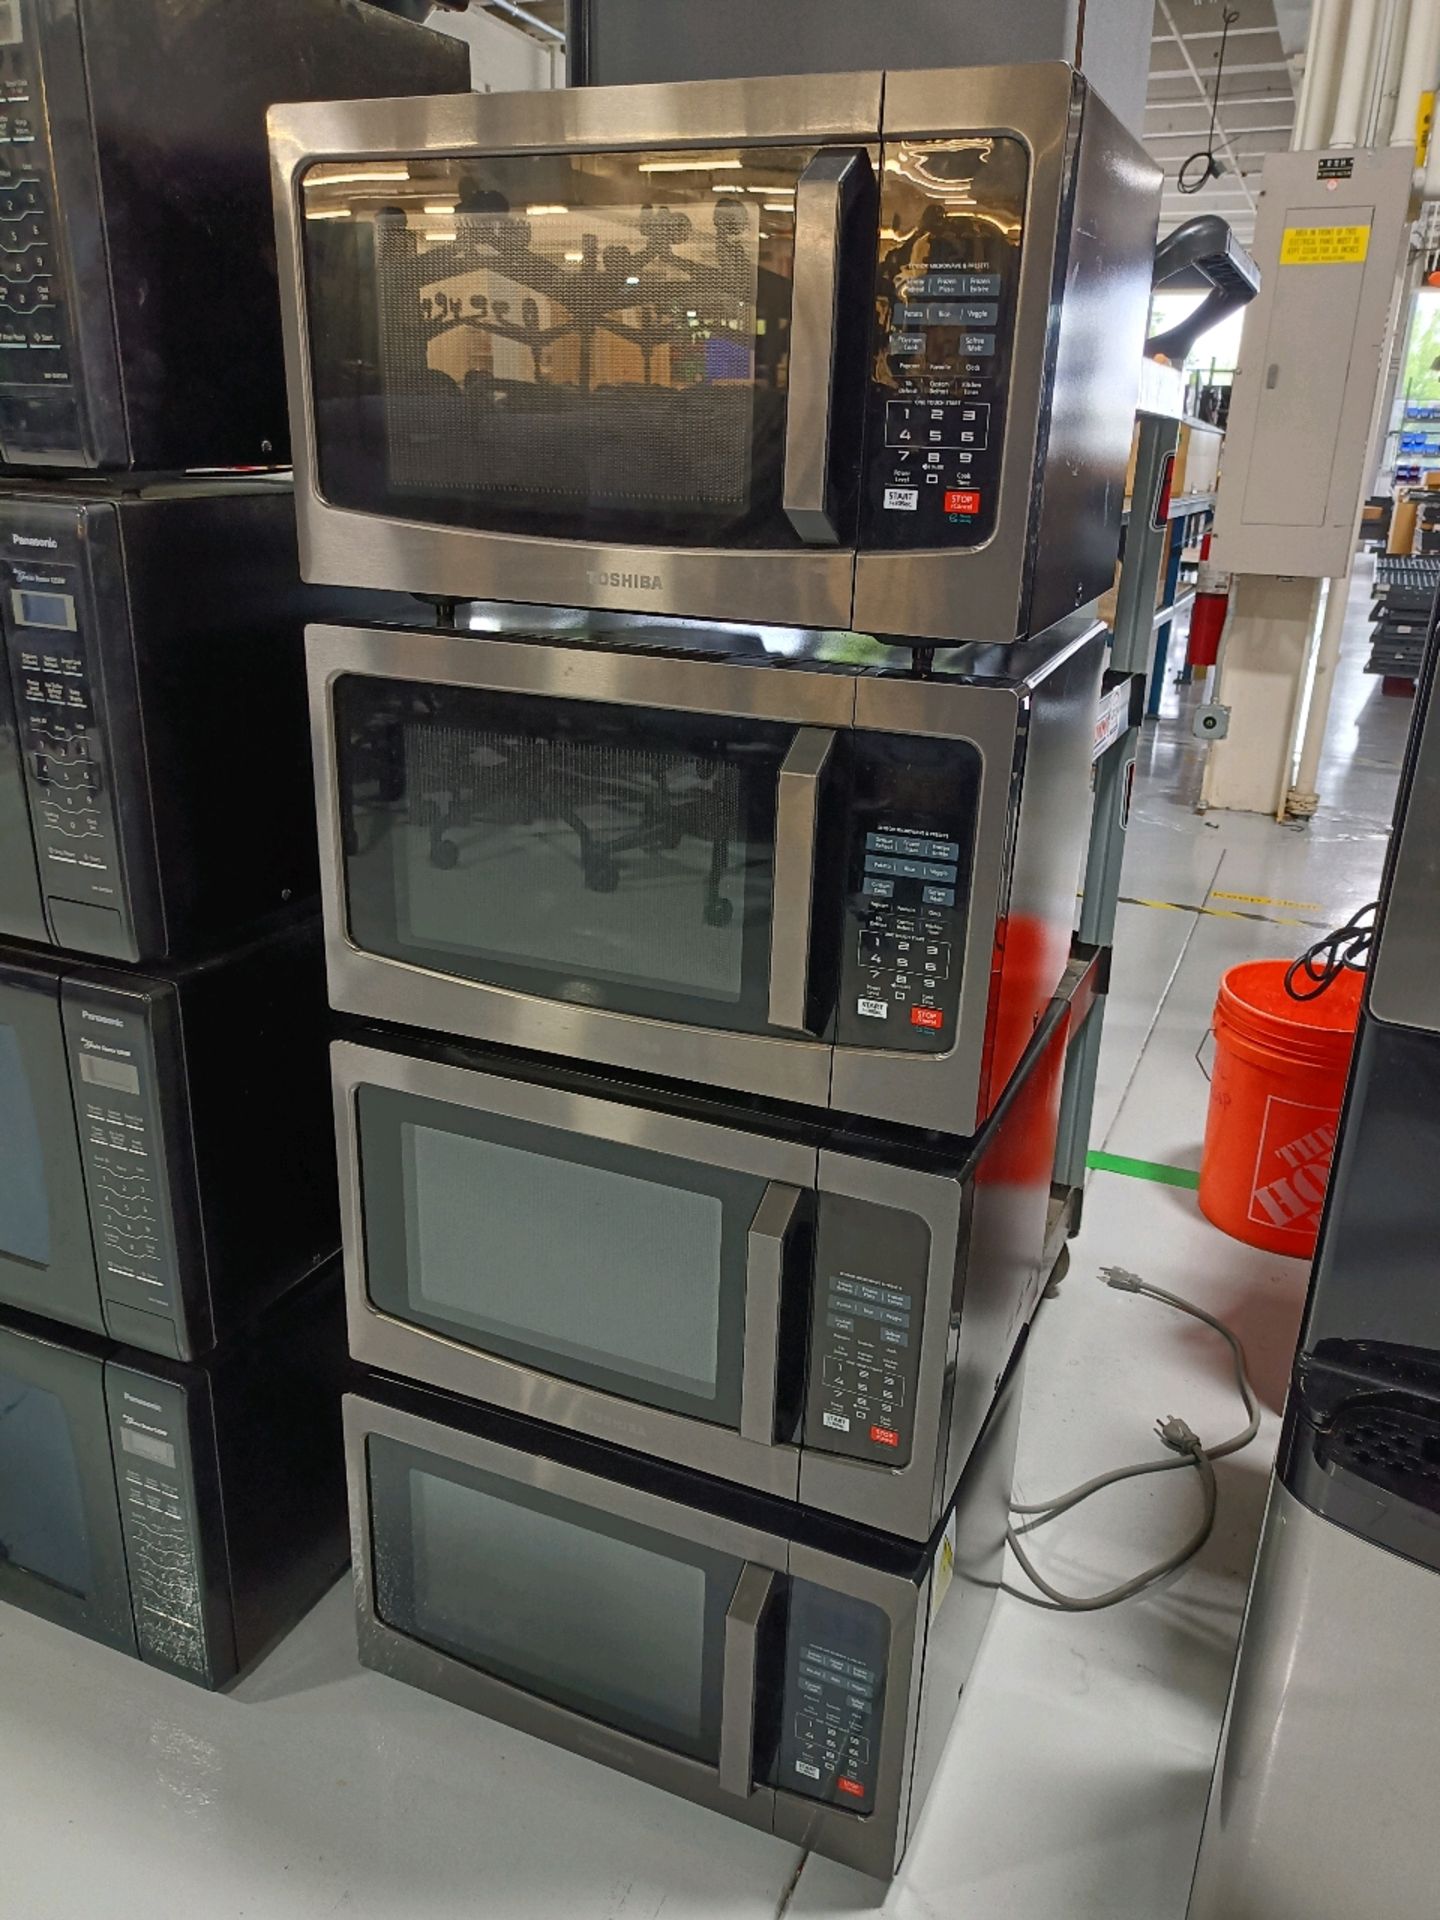 Toshiba Microwave Ovens